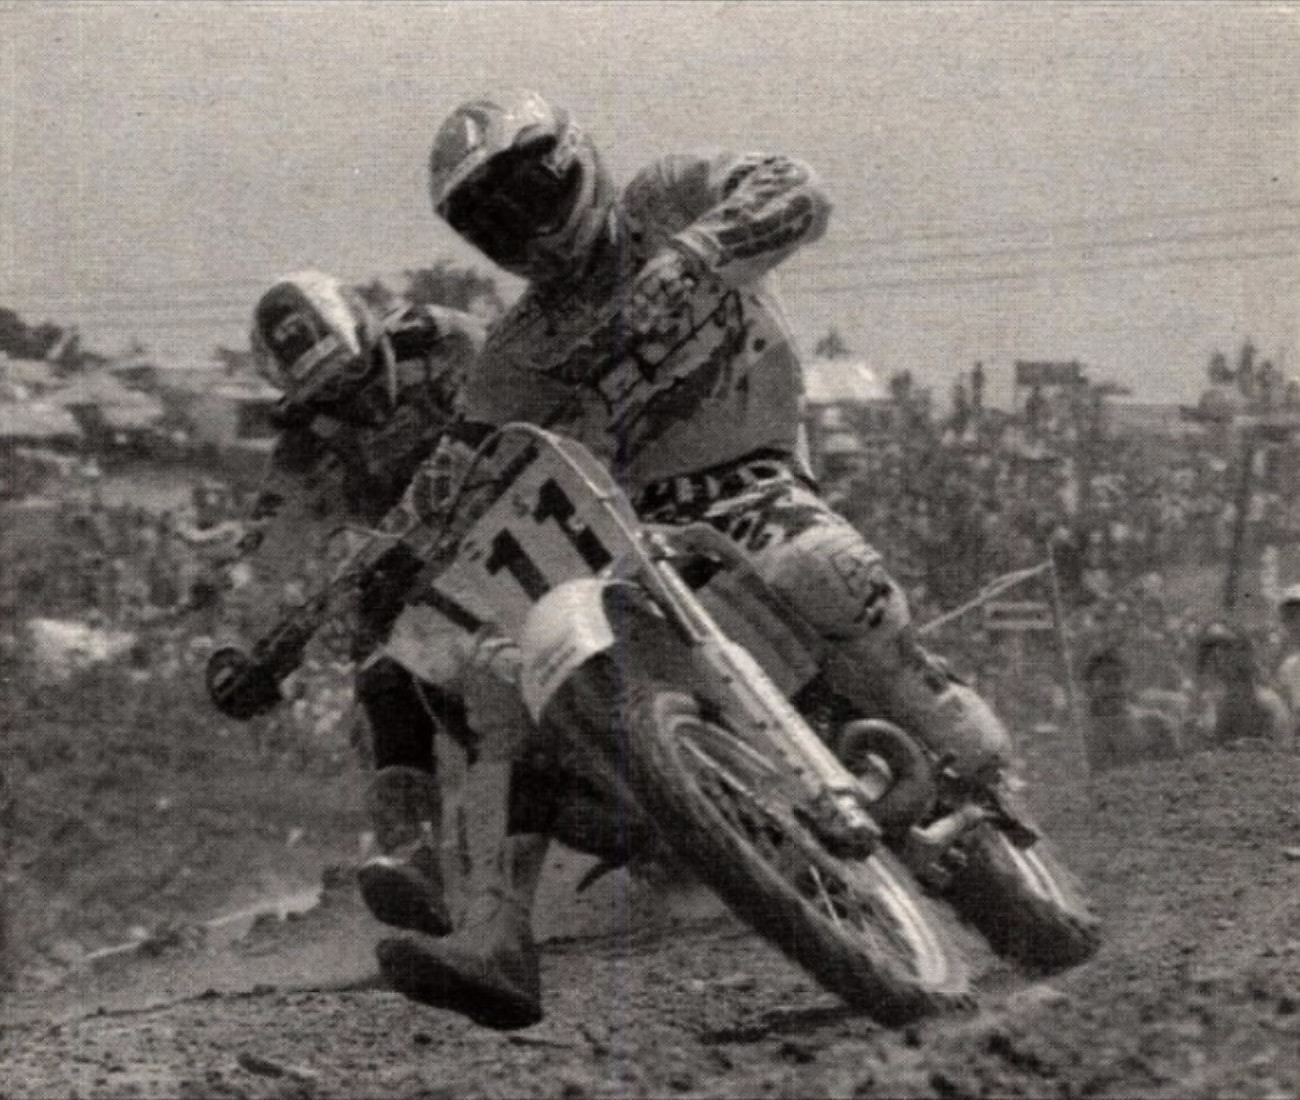 Damon Bradshaw 1991, Mt. Morris. Cycle News Archives